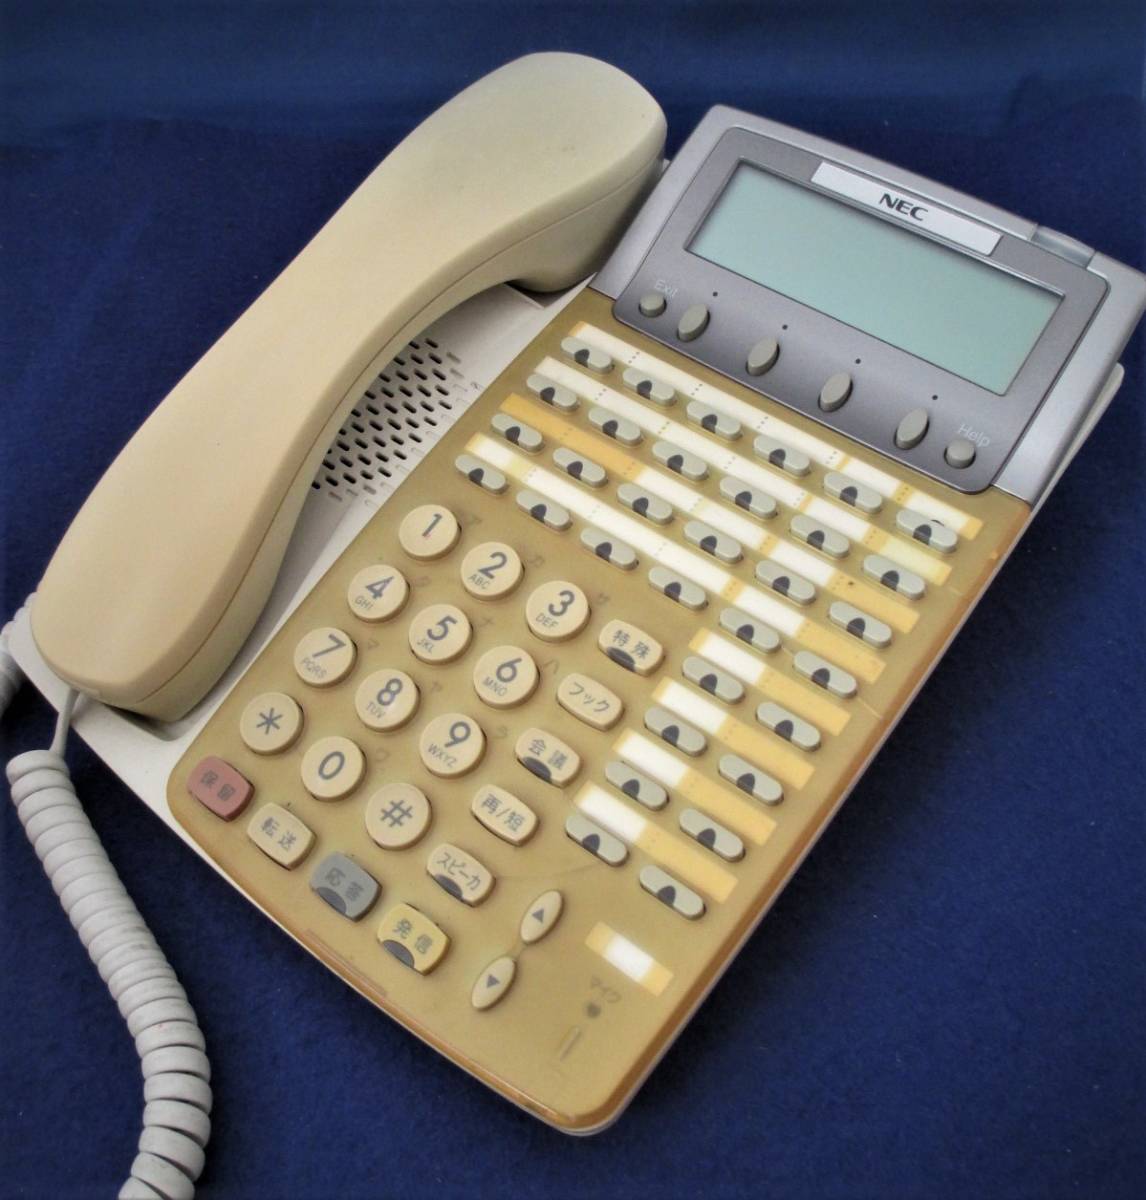 【NEC】Dterm85 多機能電話機 DTR-32K-1D(WH)＝32ボタン漢字表示付き(JUNK）_NEC Dterm85 多機能電話機 DTR-32K-1D